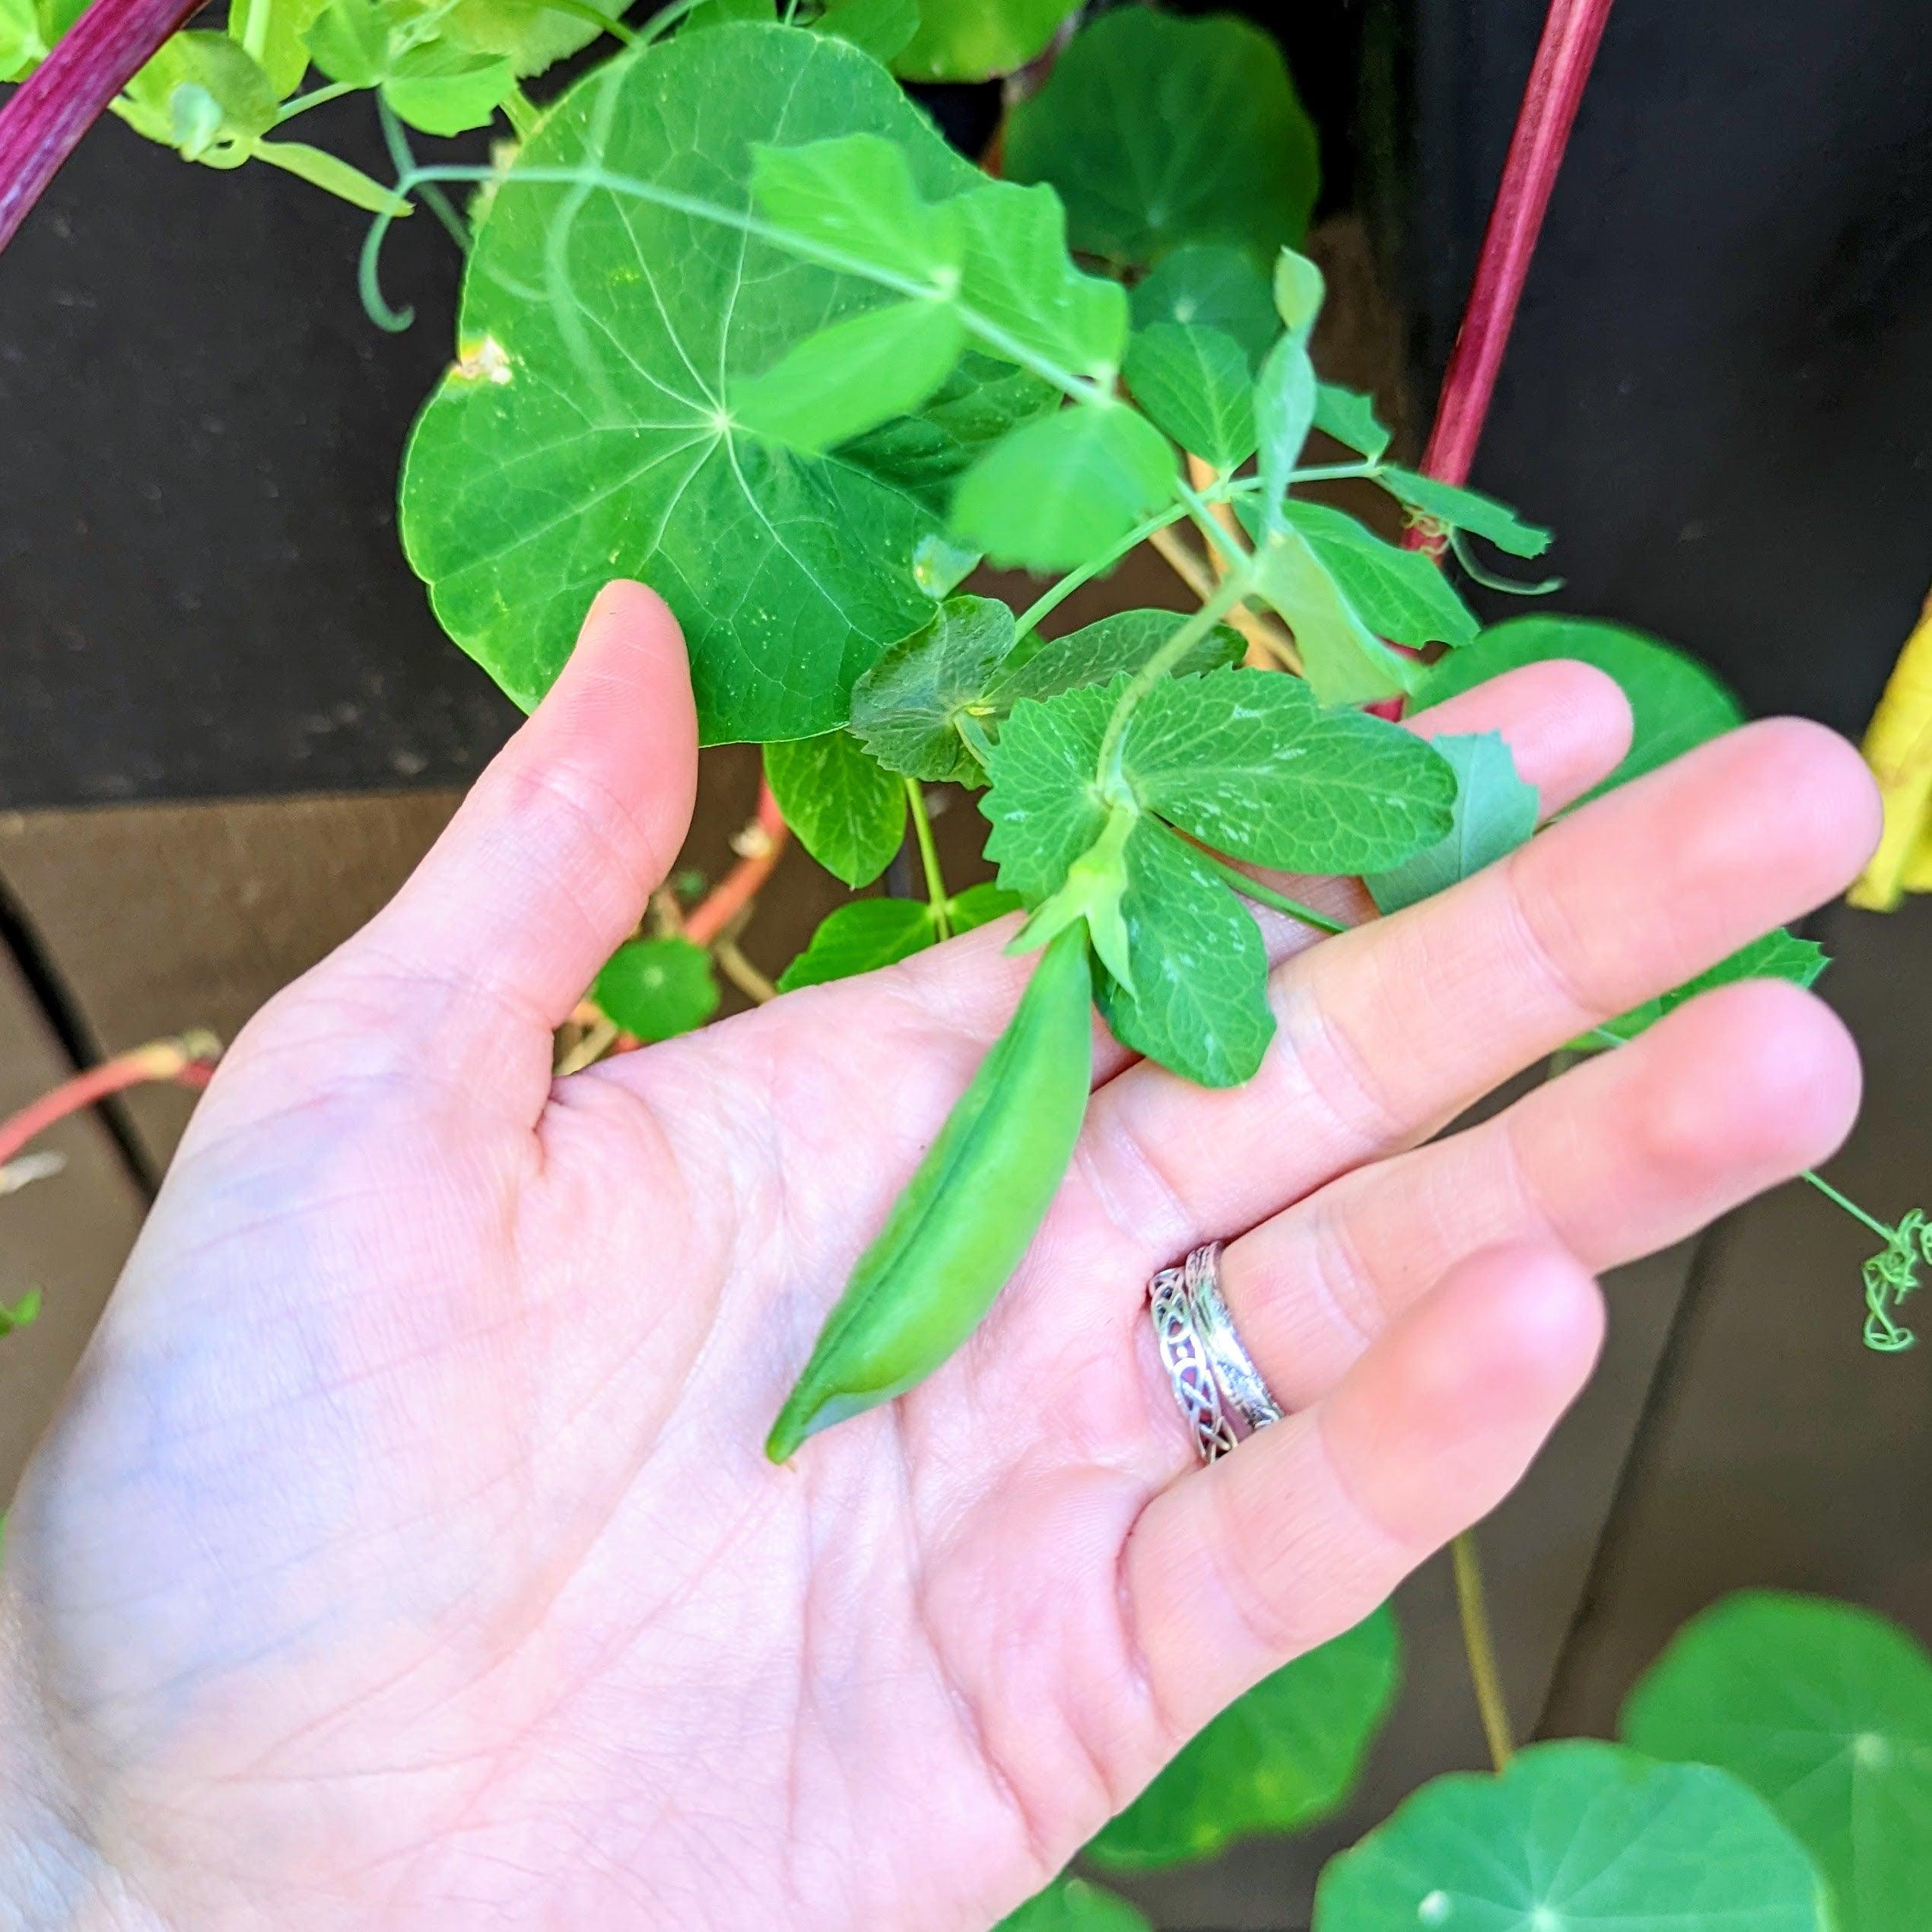 Organic Sugar Snap Pea Seeds - Plantflix